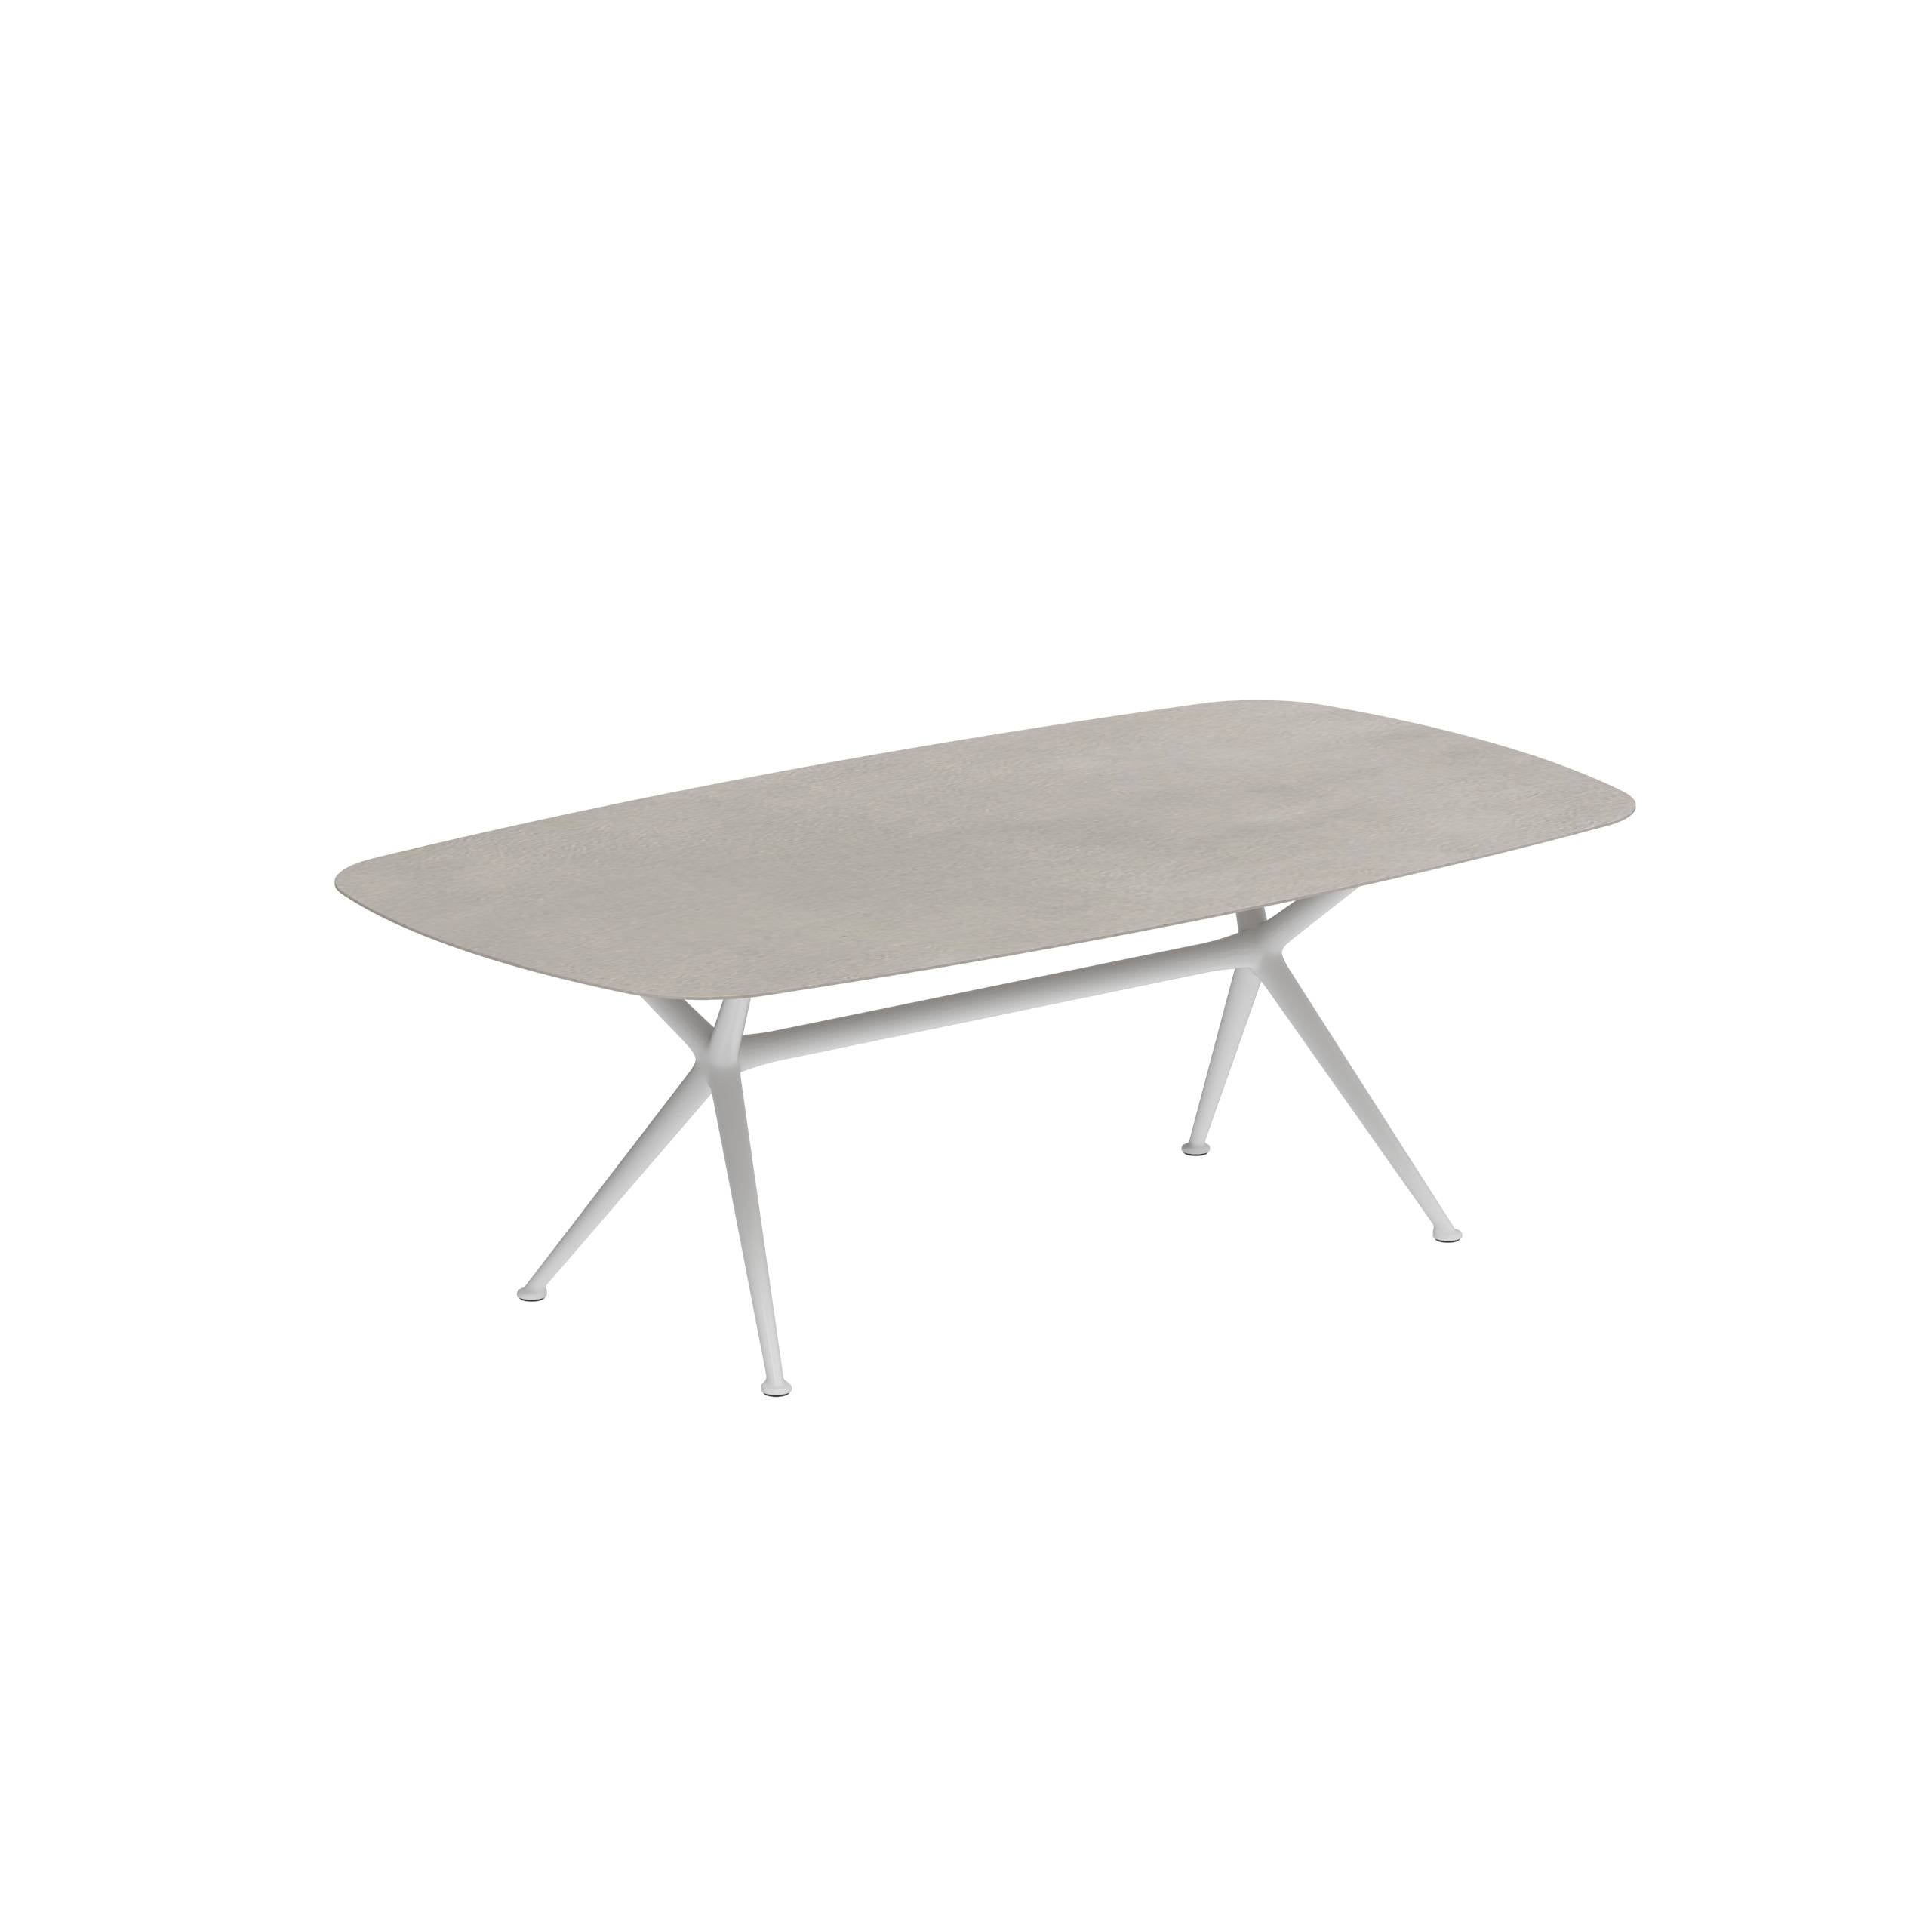 Exes Table 220x120cm Alu Legs White - Table Top Ceramic Cemento Luminoso